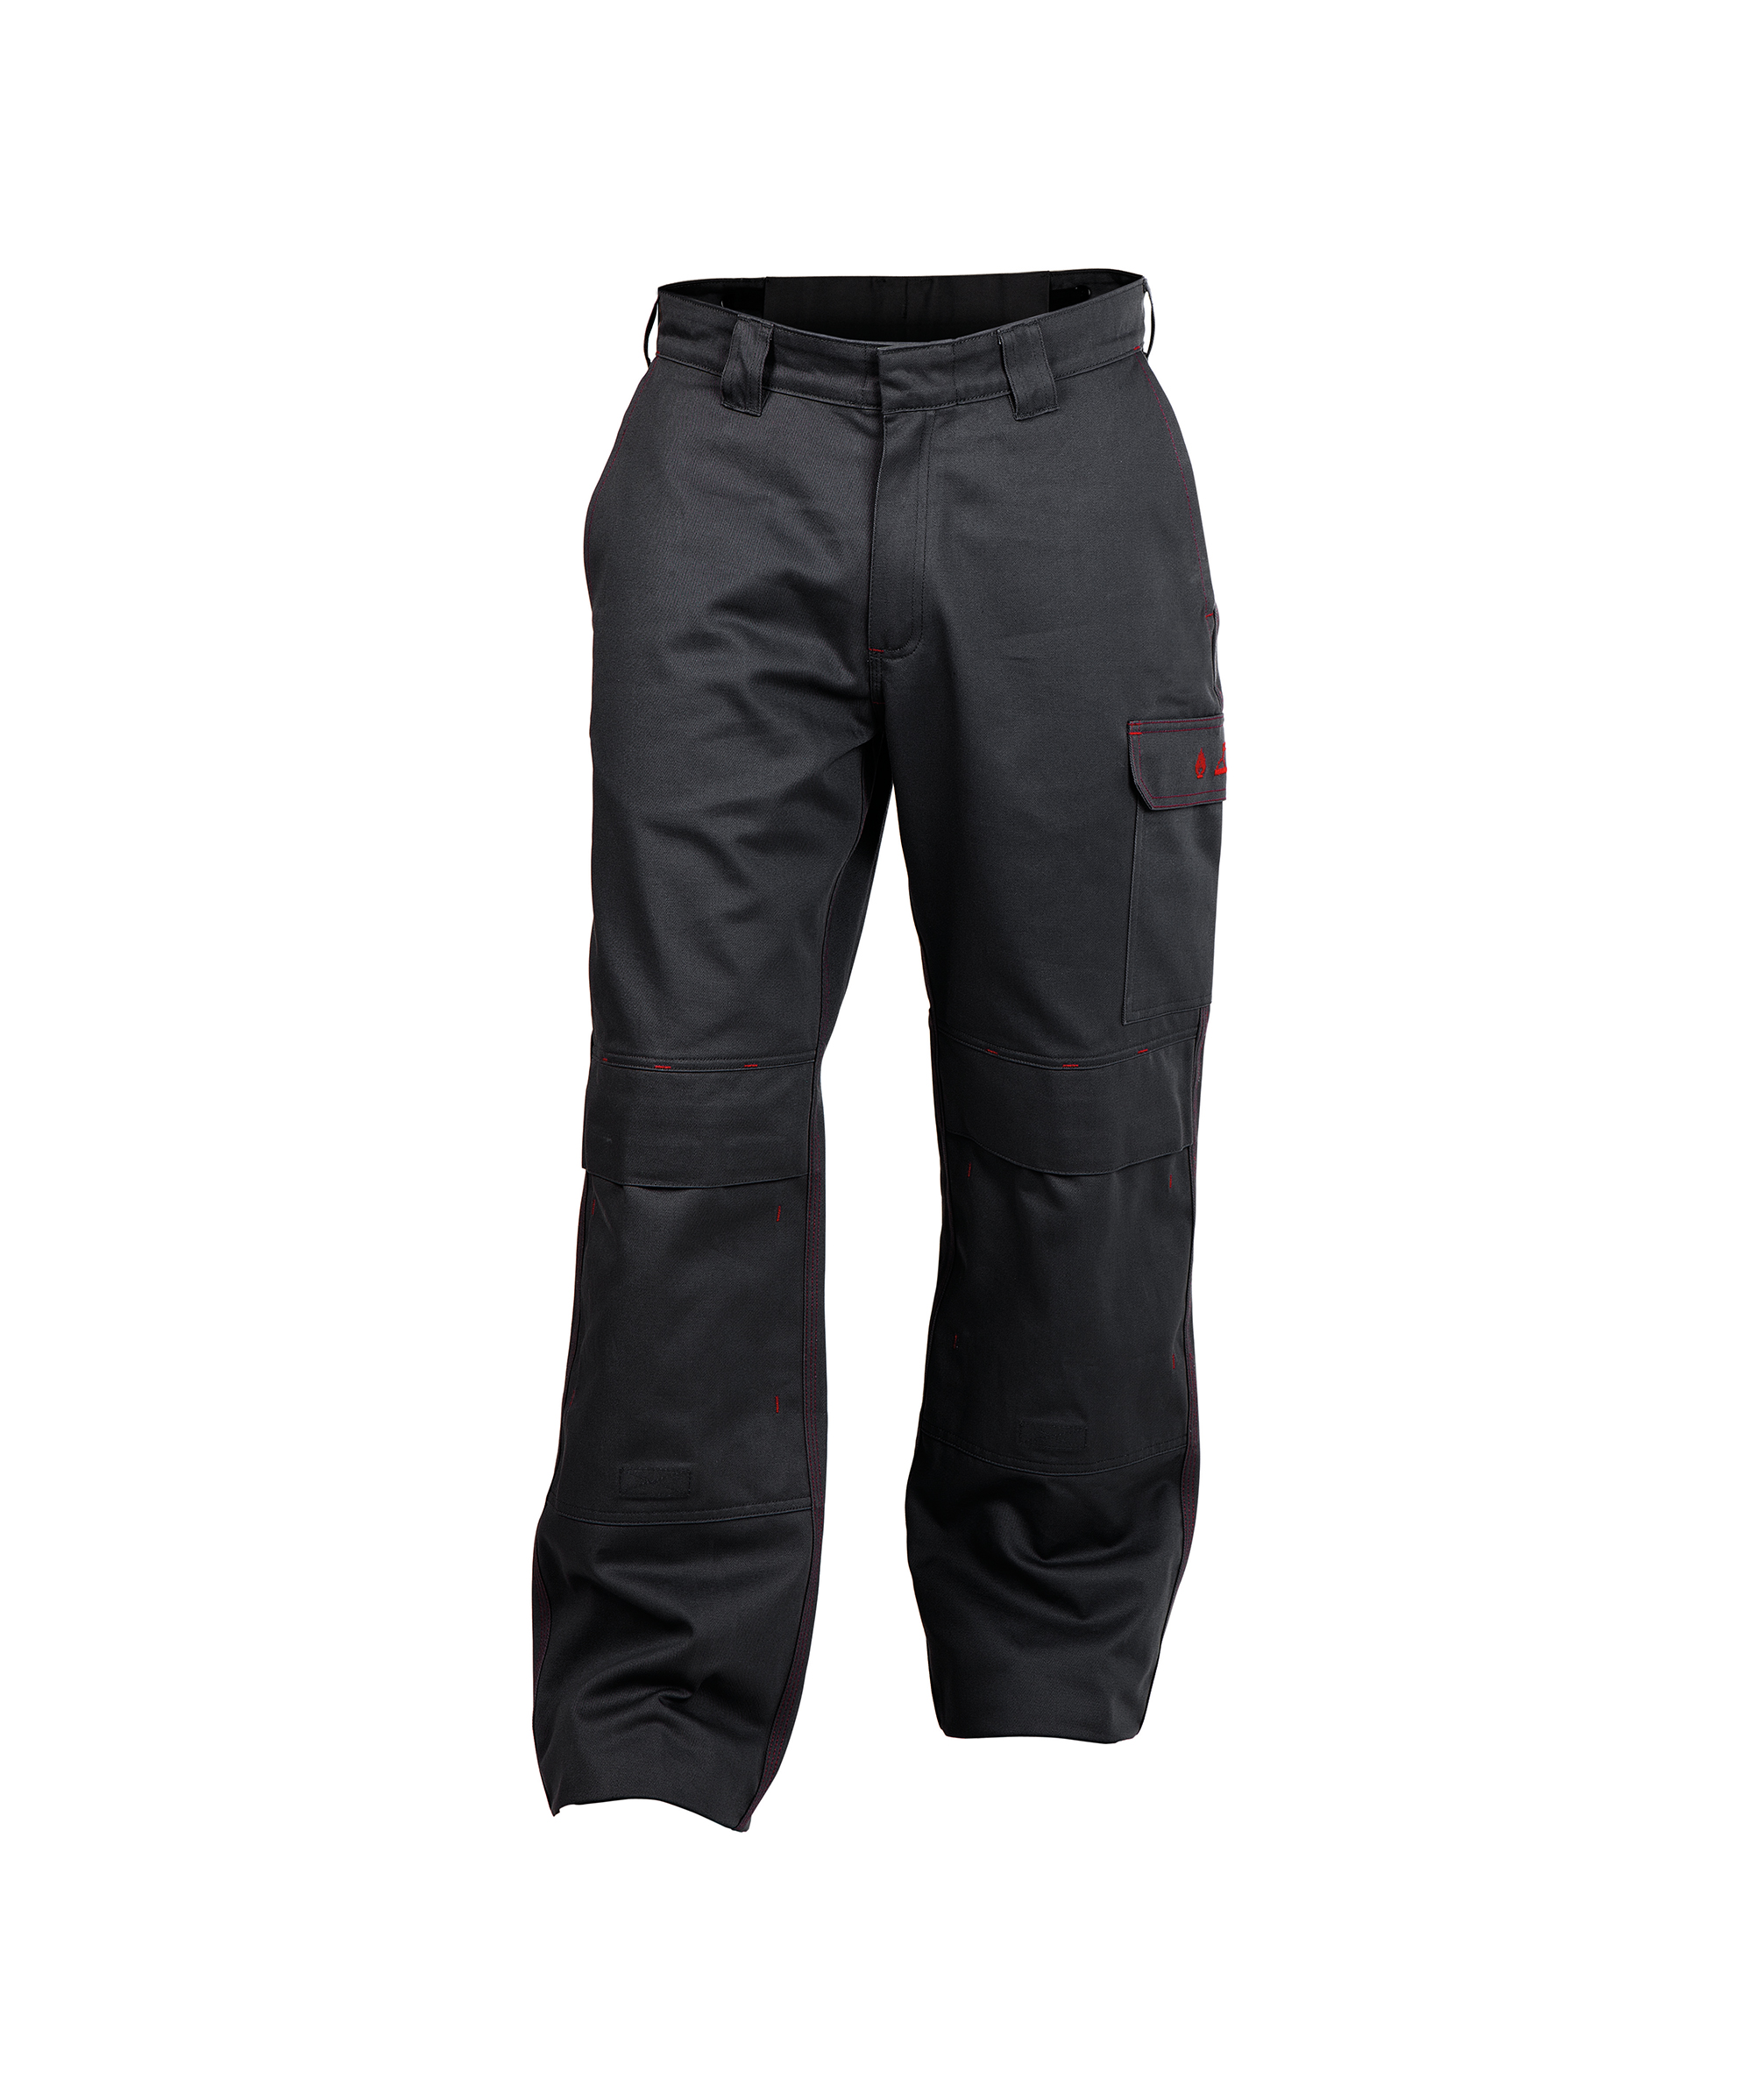 arizona_flame-retardant-work-trousers-with-knee-pockets_black_front.jpg